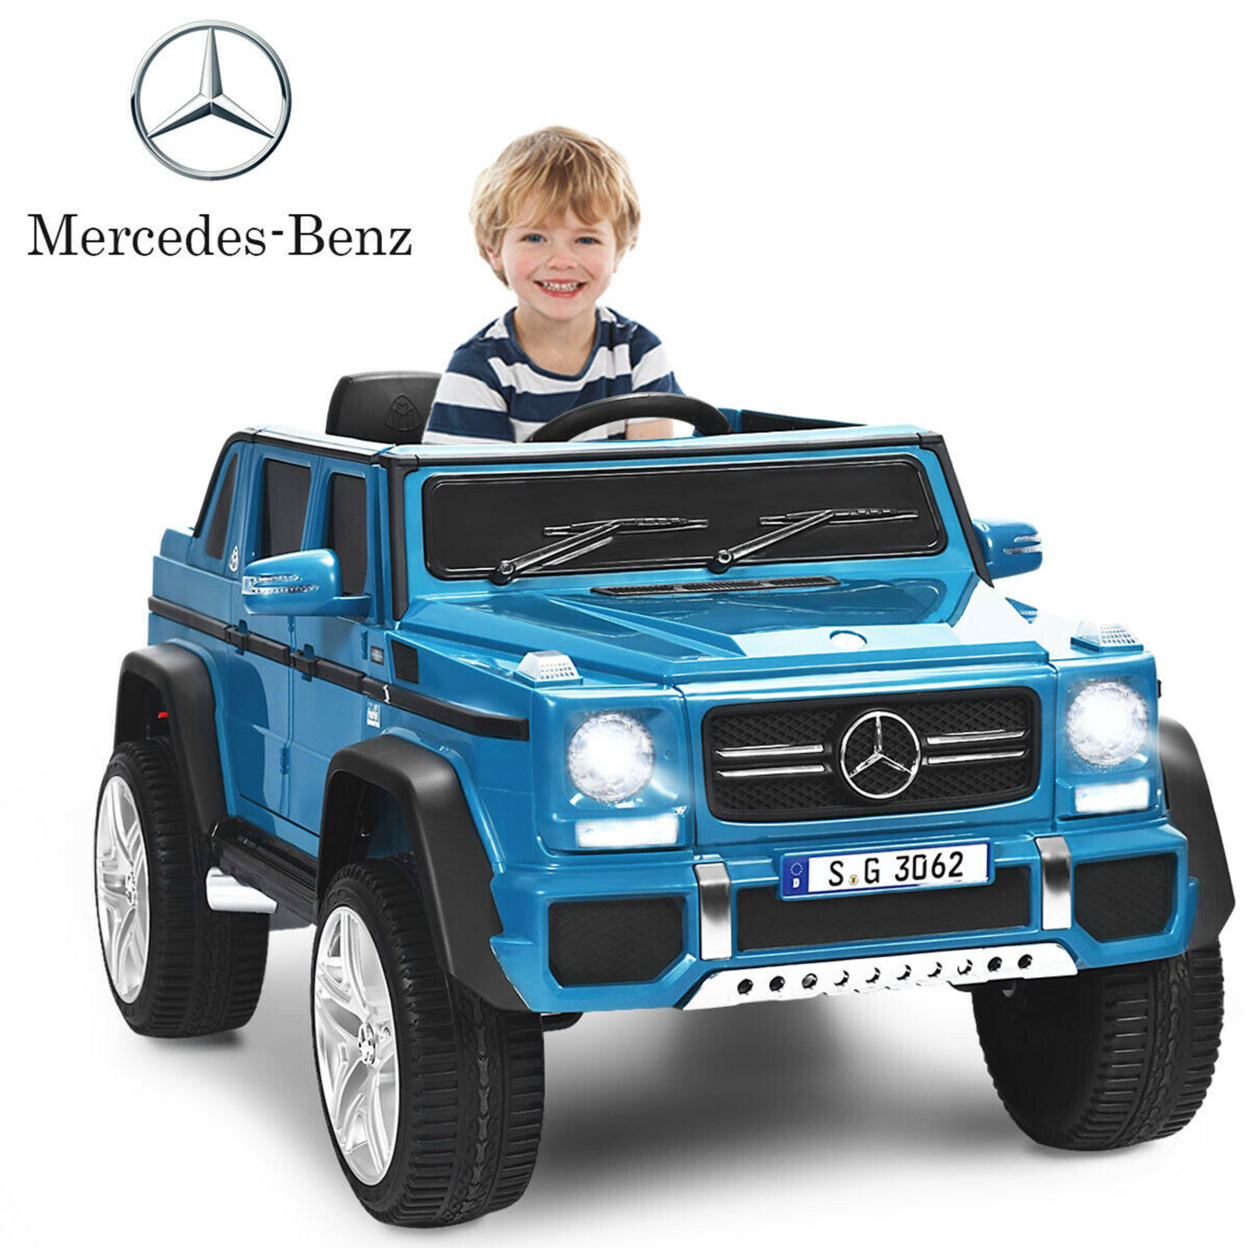 12V Licensed Mercedes-Benz Kids Ride On Car RC Motorized Vehicles W/ Trunk - Navy